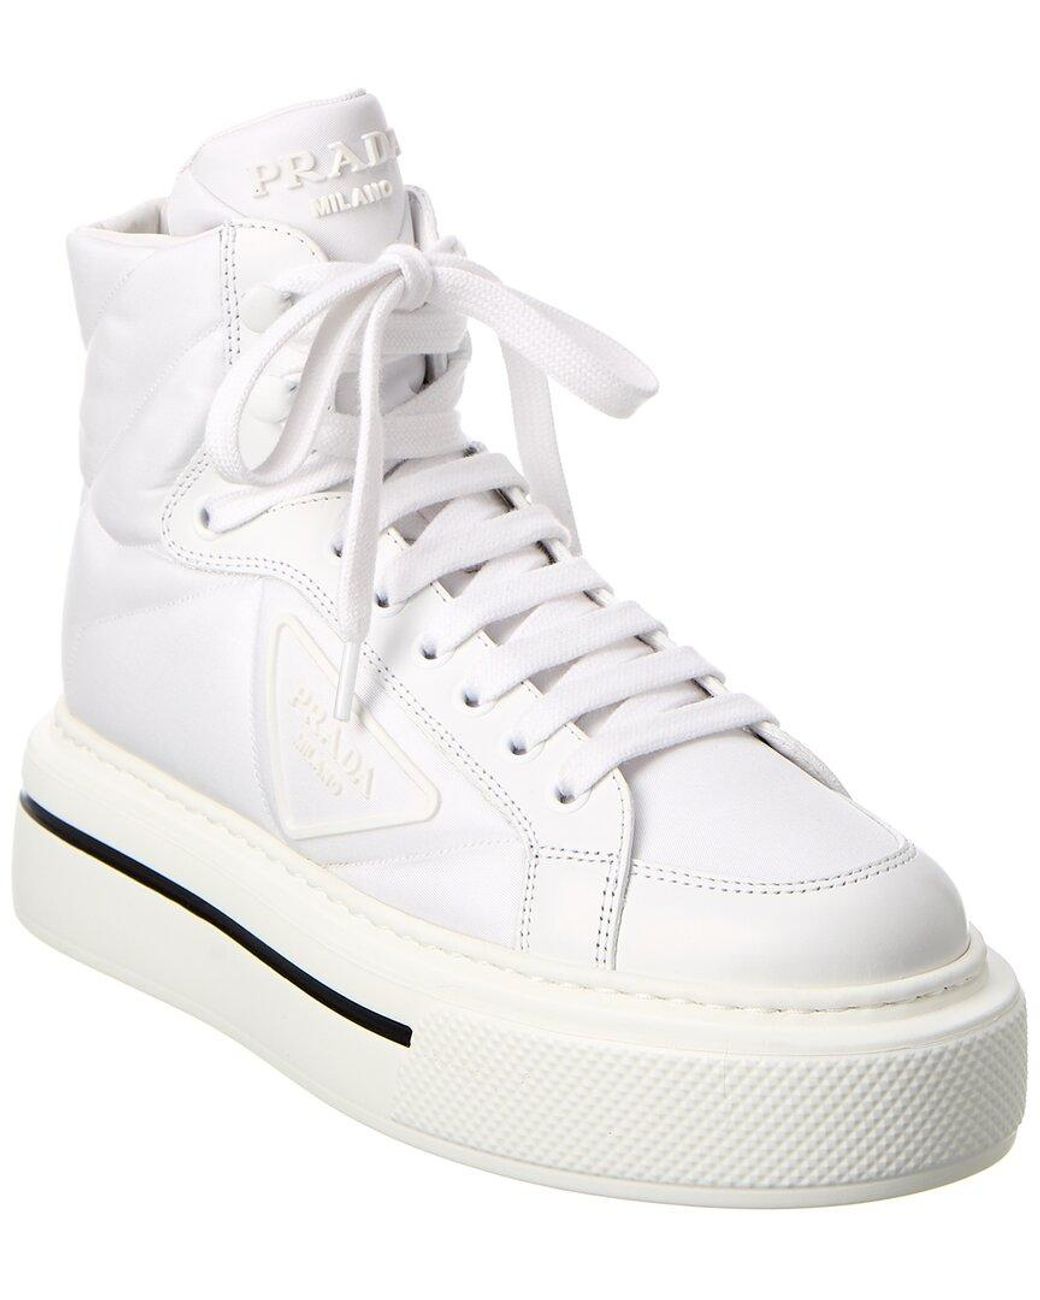 Prada Macro Nylon & Leather High-top Sneaker in White | Lyst